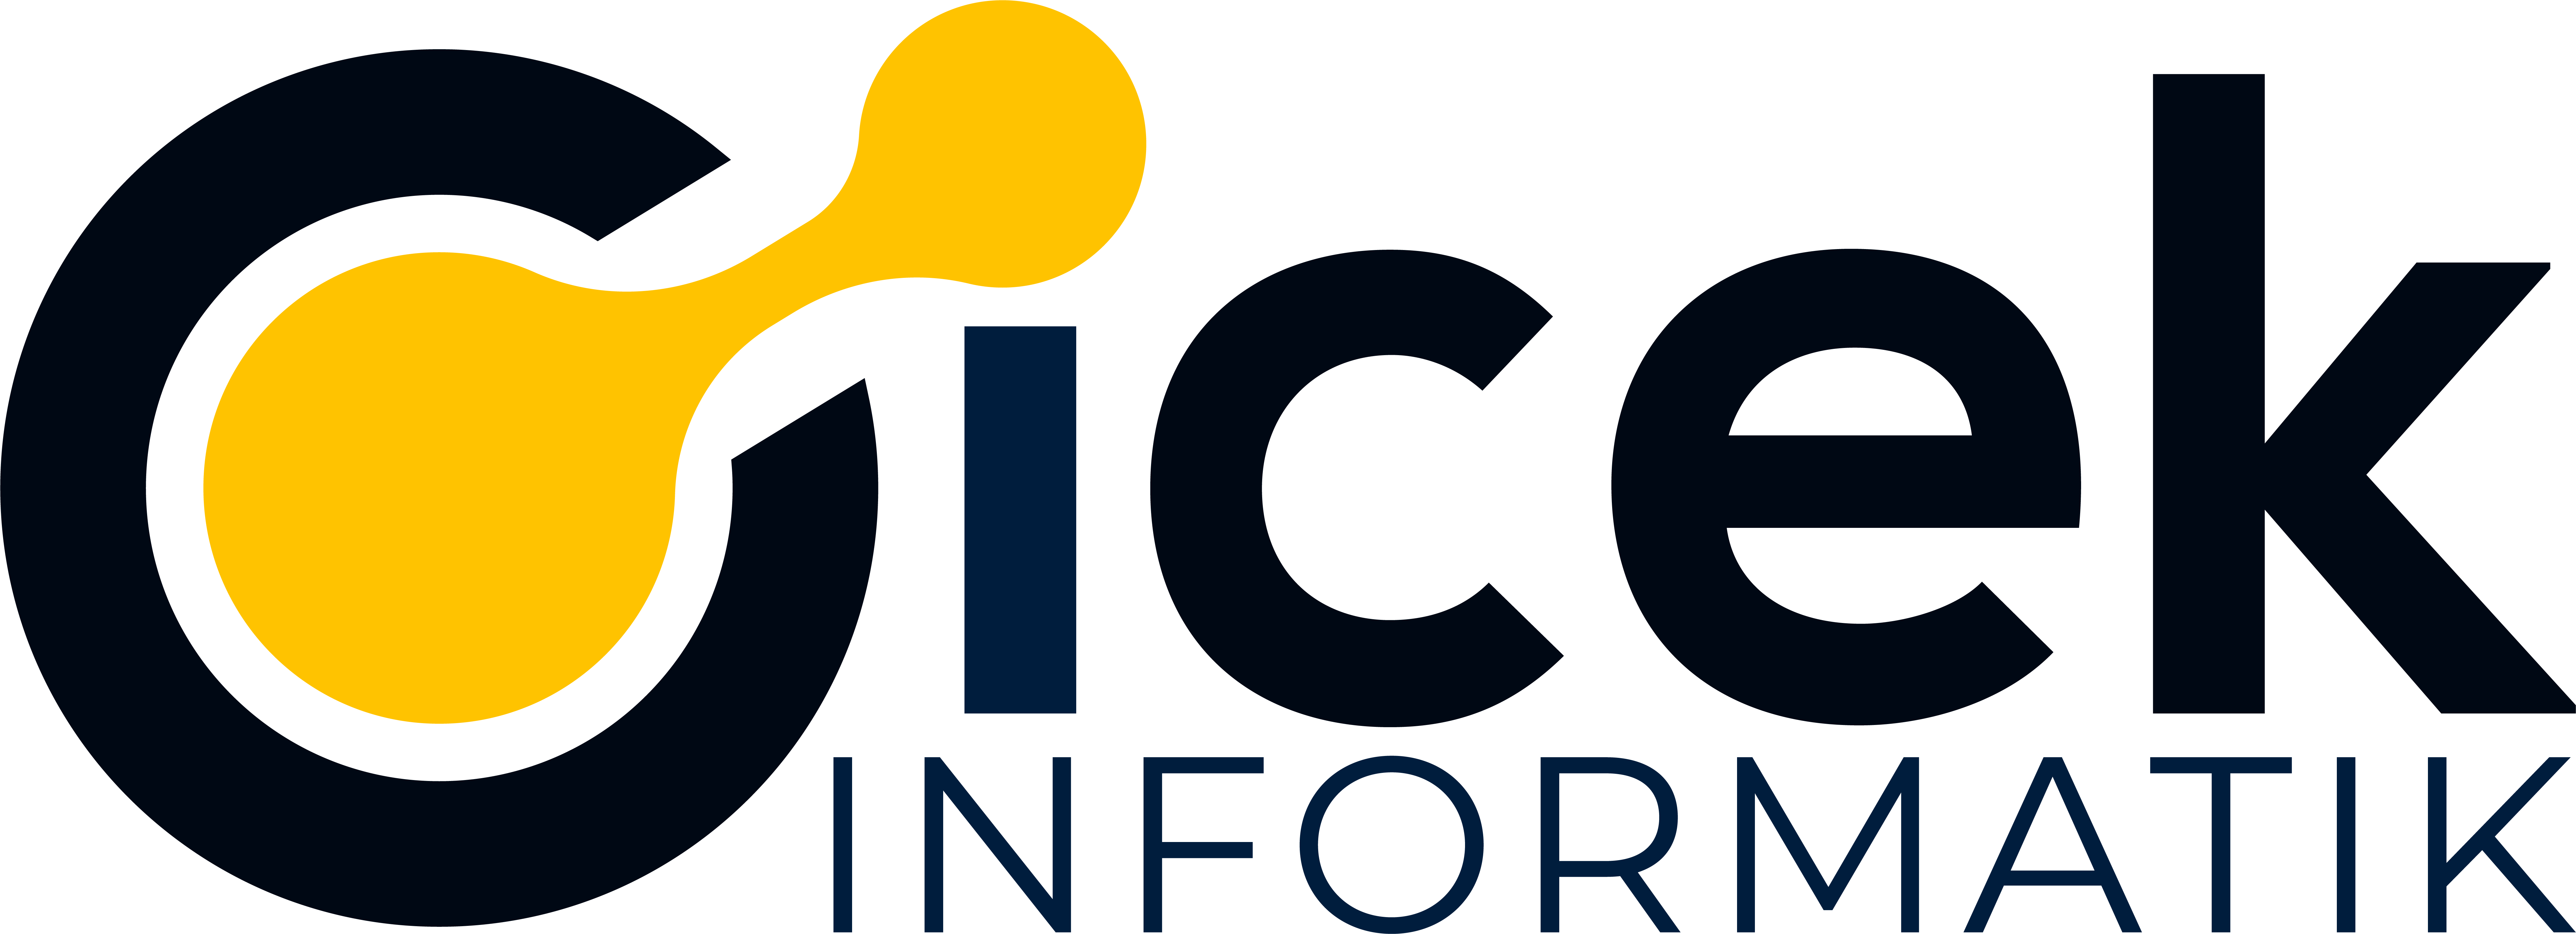 Cicek-IT Logo